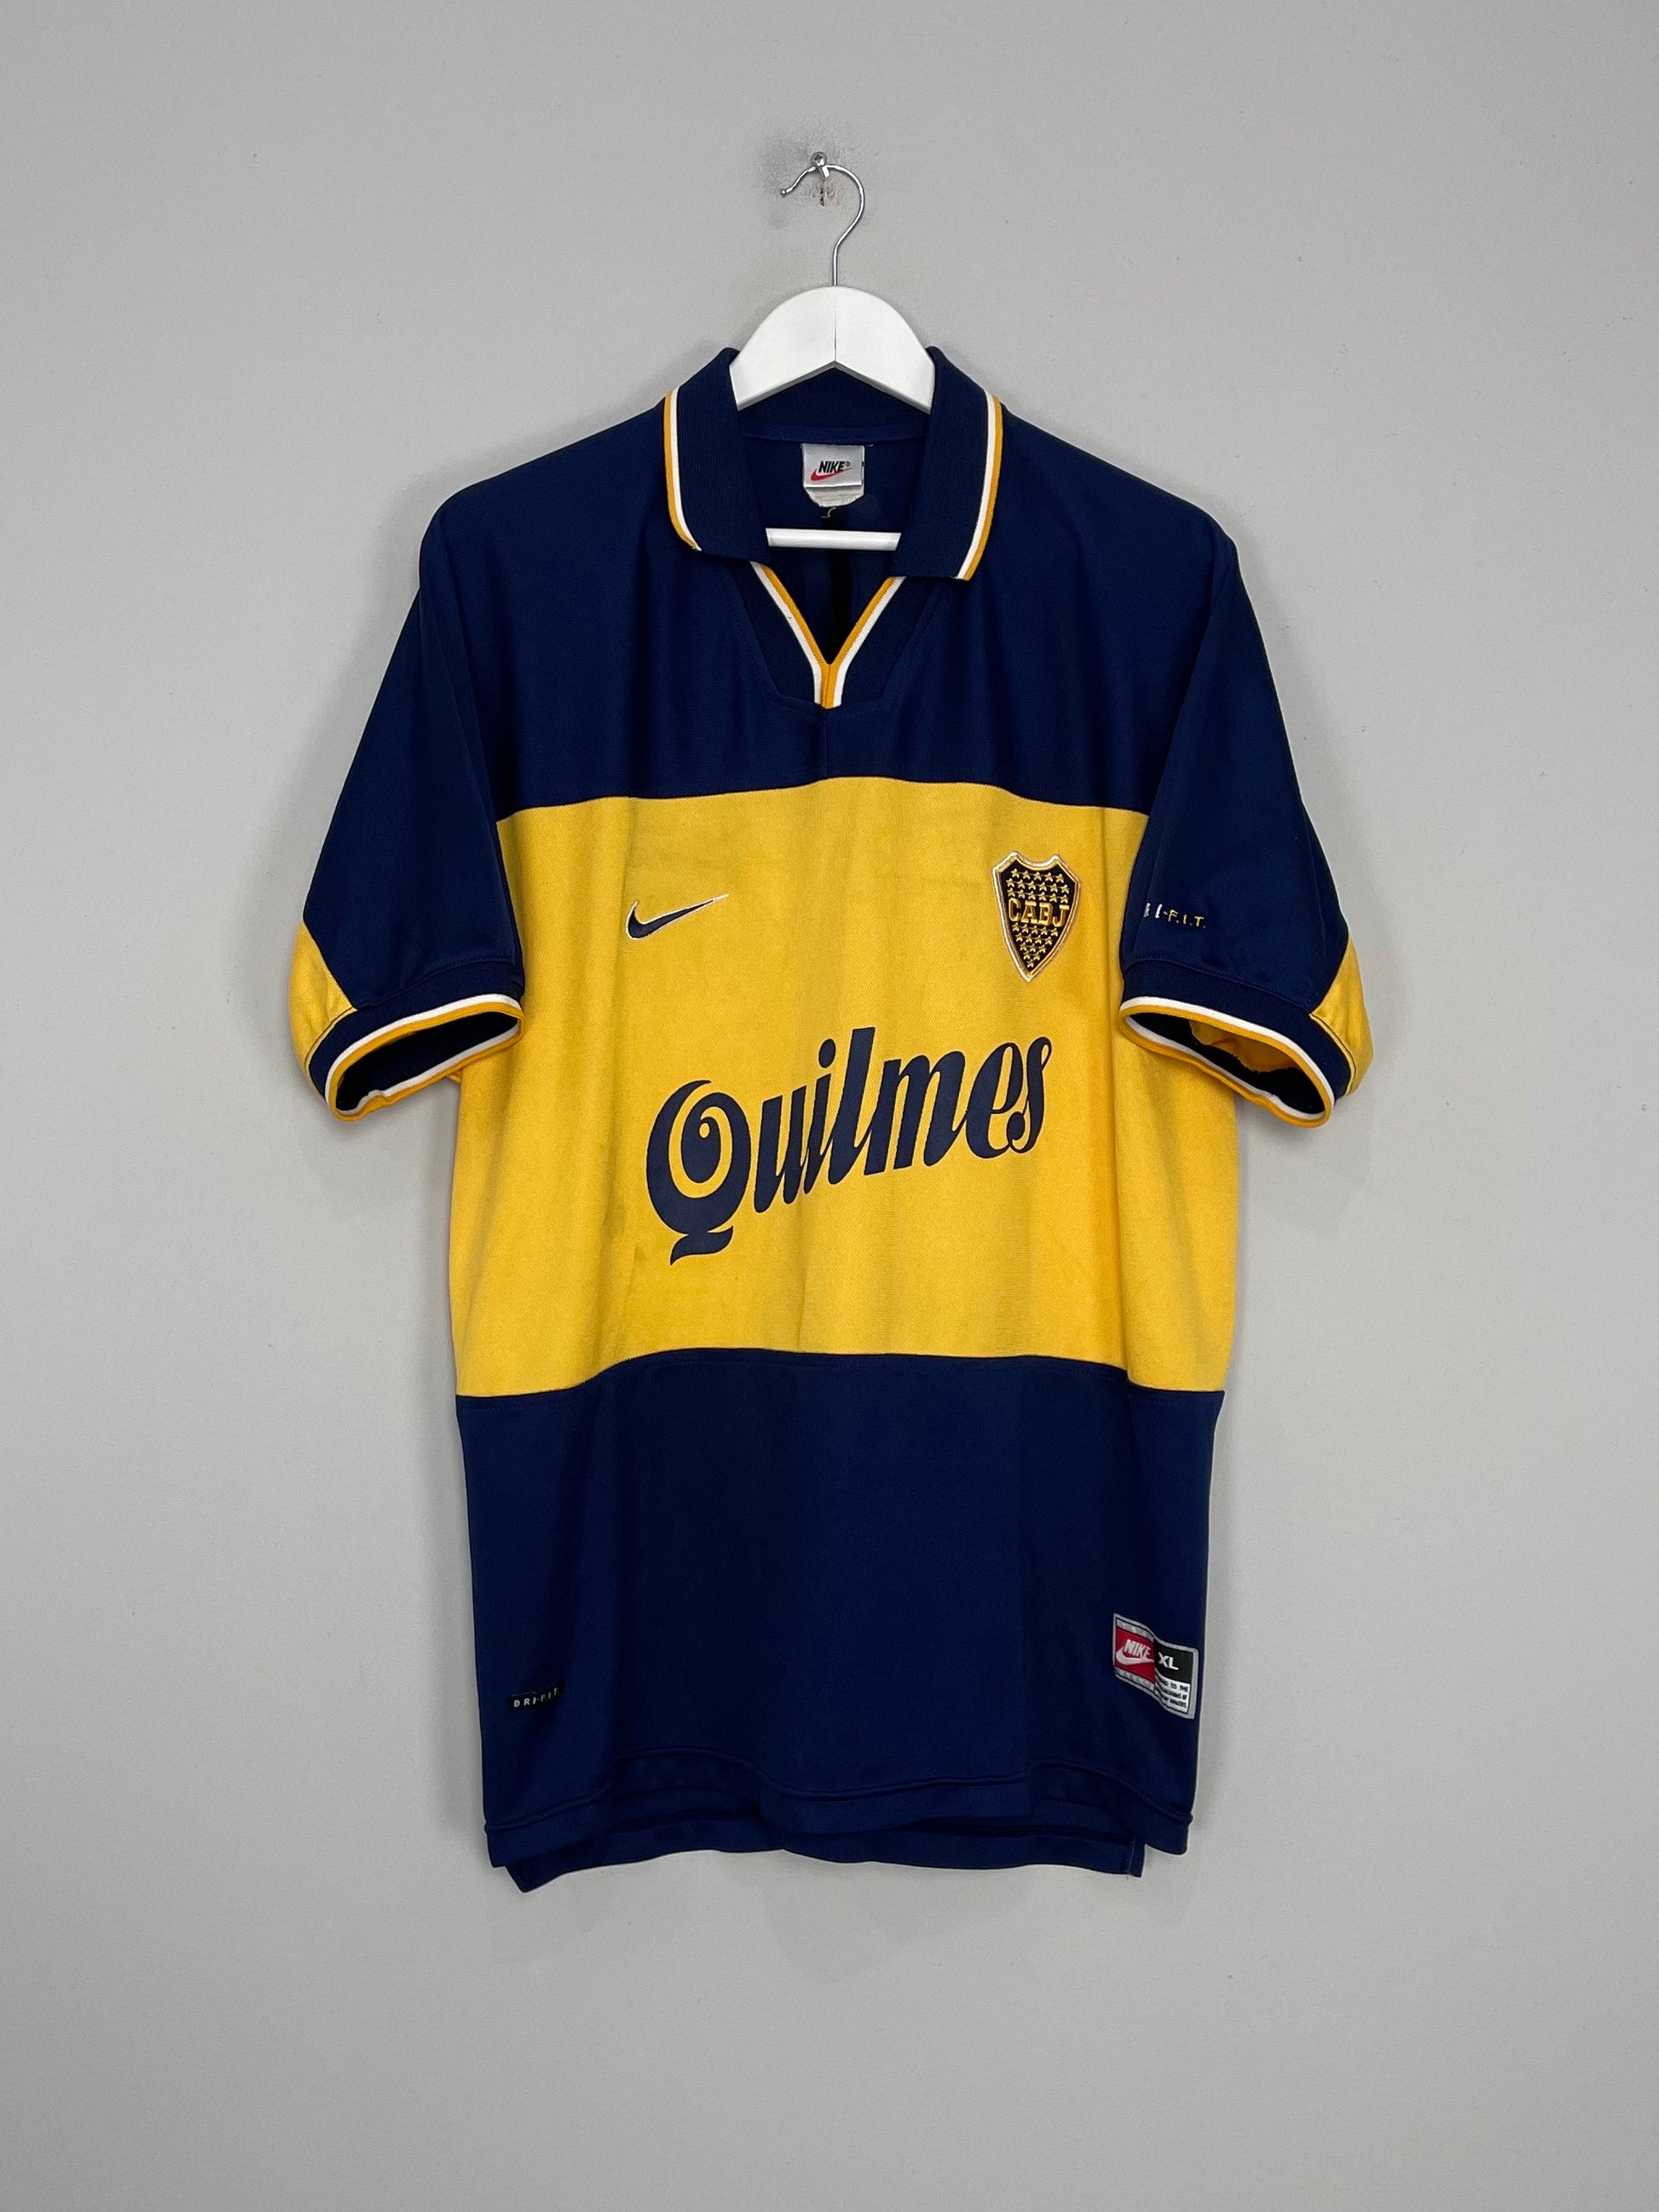 Image of the Boca Juniors shirt from the 1998/99 season